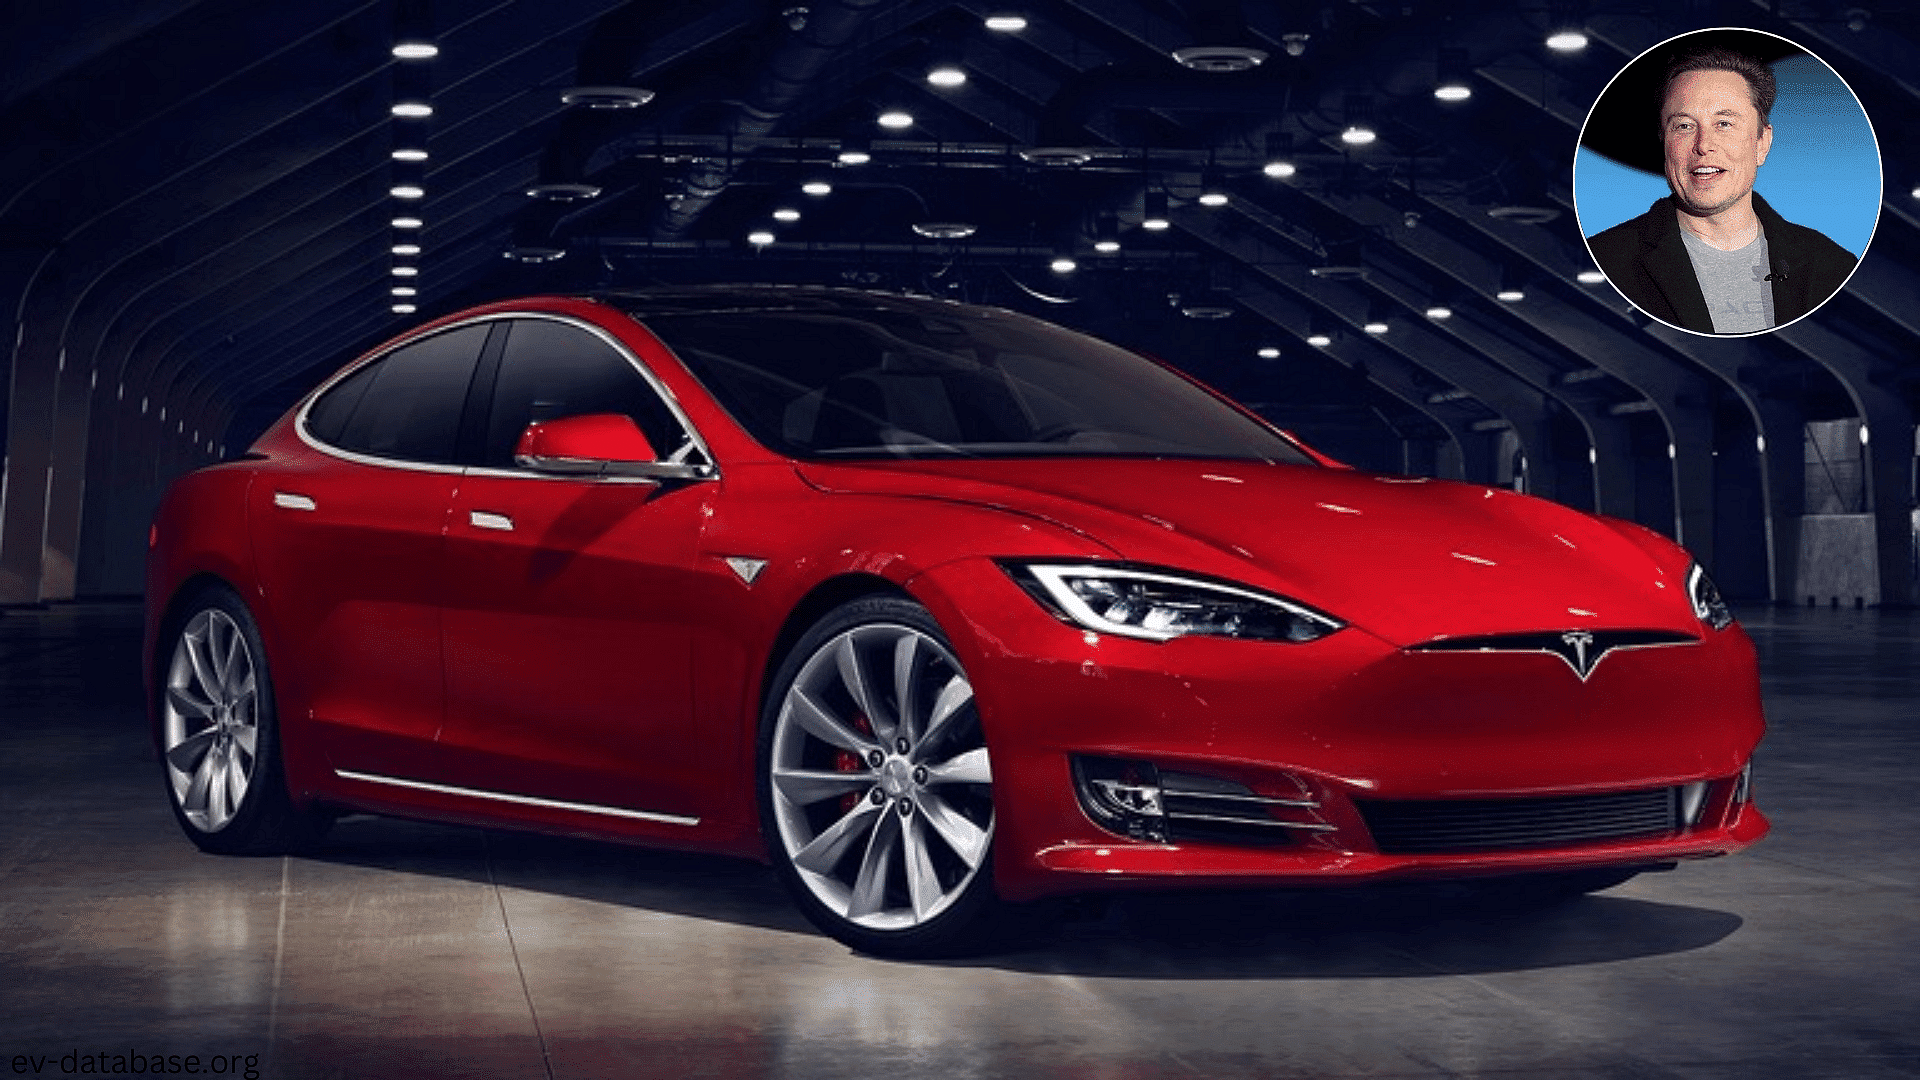 Elon Musk's 2019 Tesla Model S